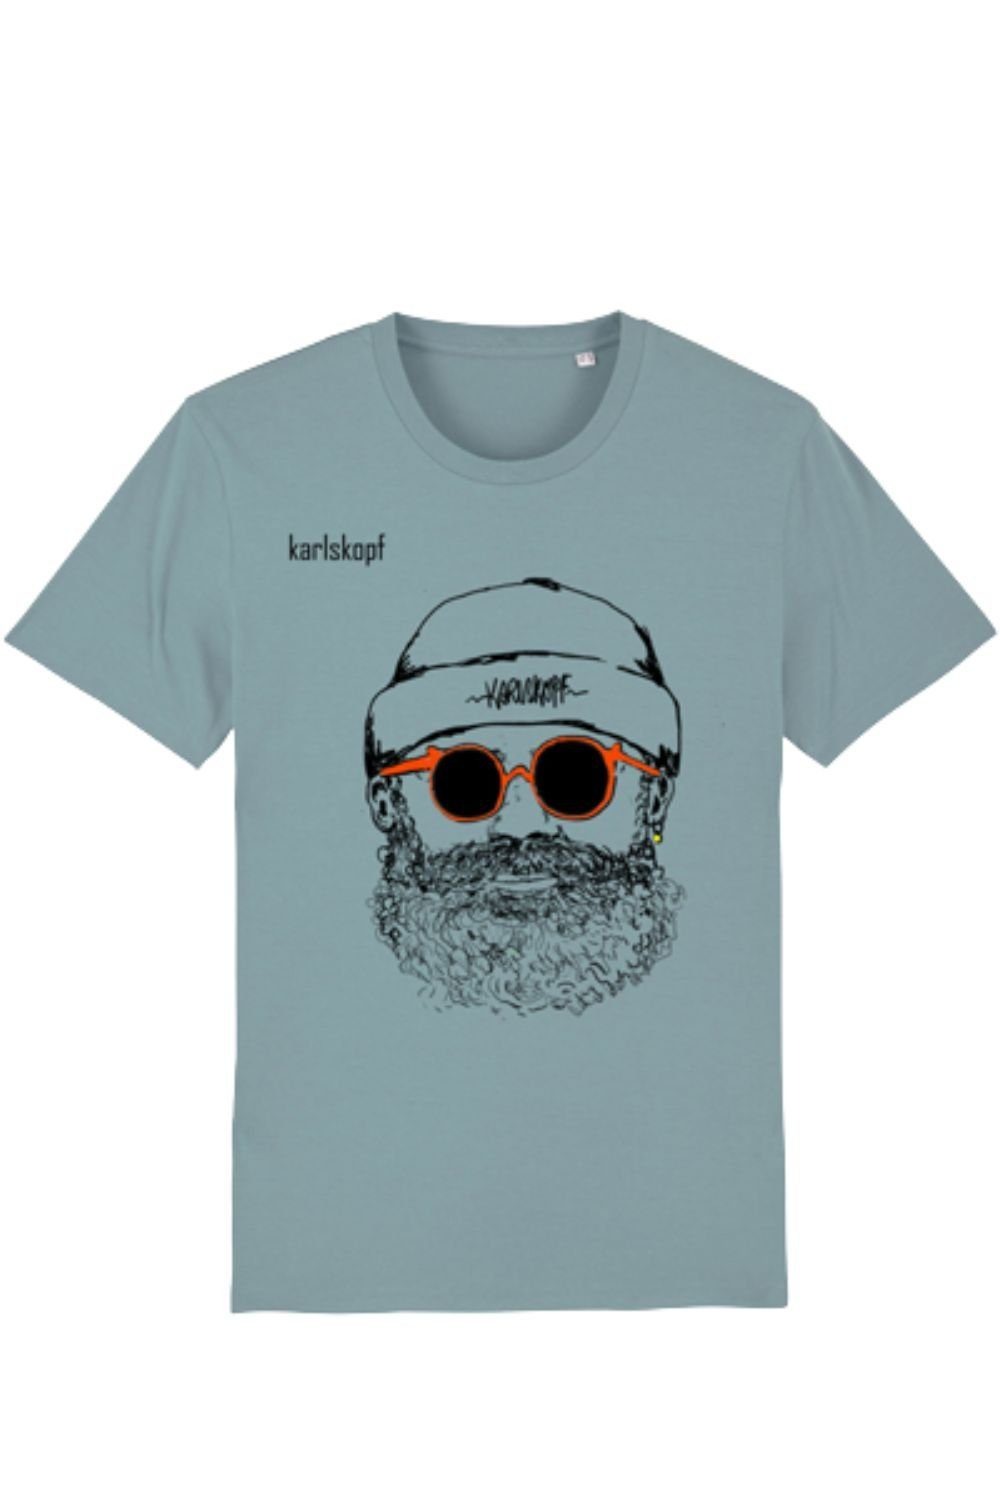 karlskopf Print-Shirt Rundhalsshirt Basic HIPSTER Erdblau